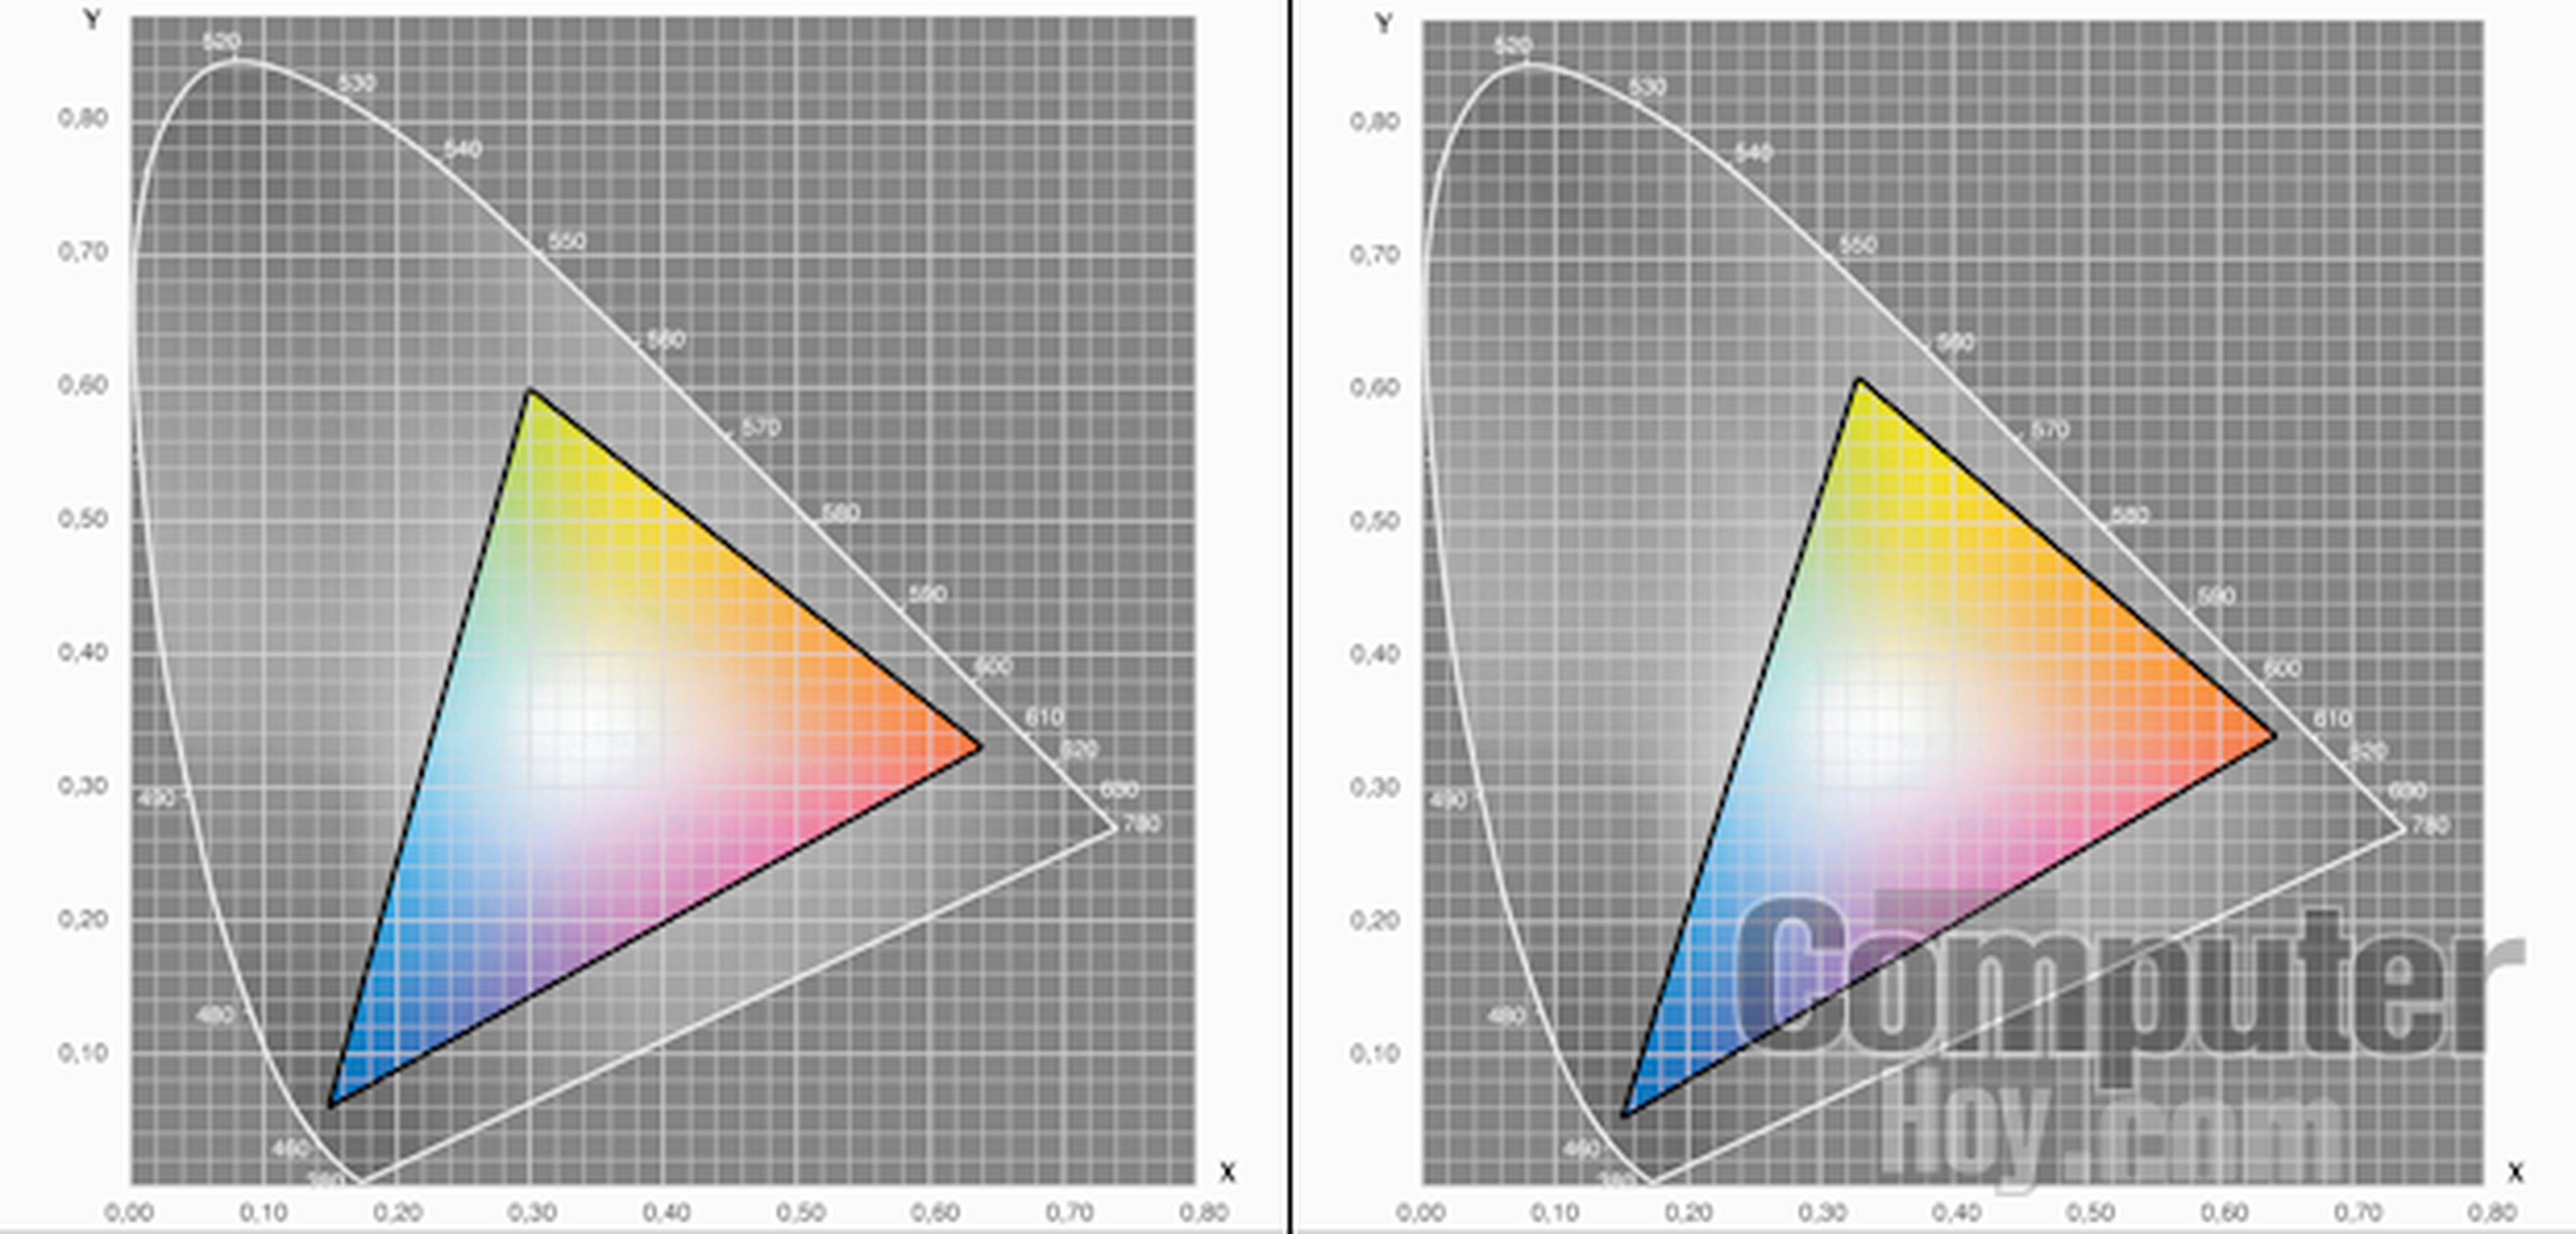 Gamut de color: espacio sRGB - Asus ZenFone 2 ZE551ML